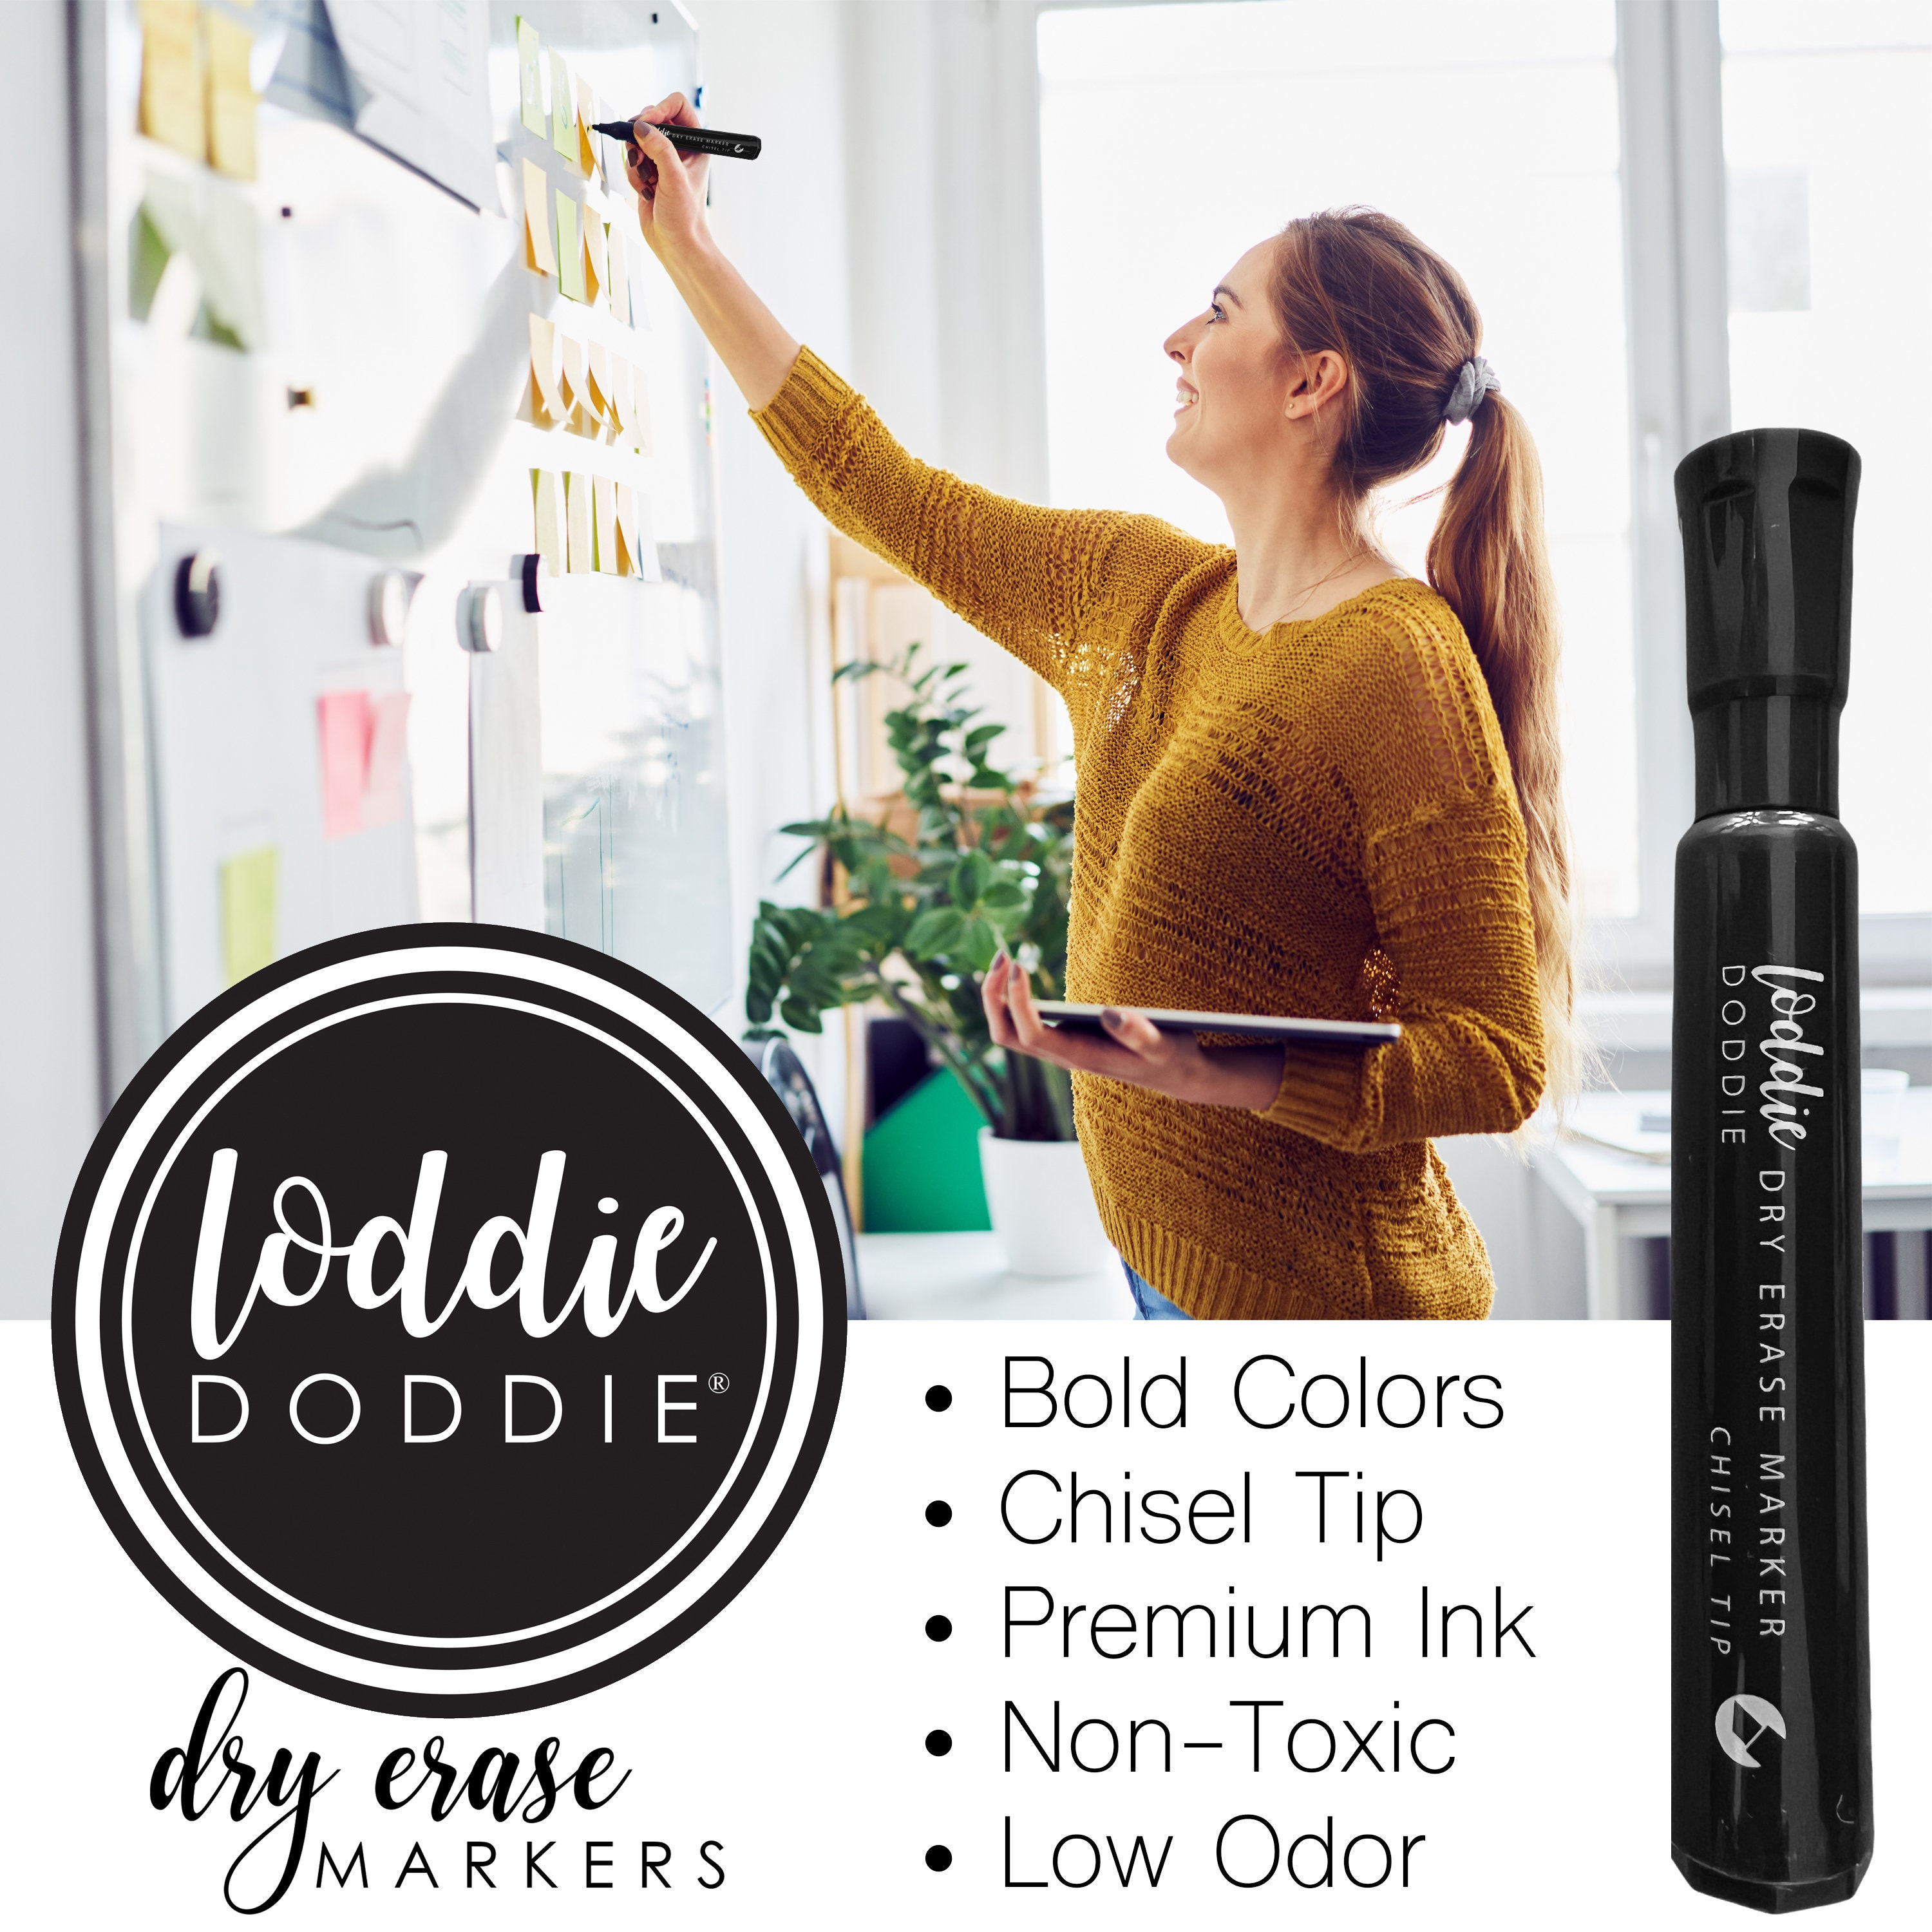 Loddie Doddie 10ct Magnetic Dry Erase Markers with Eraser Caps